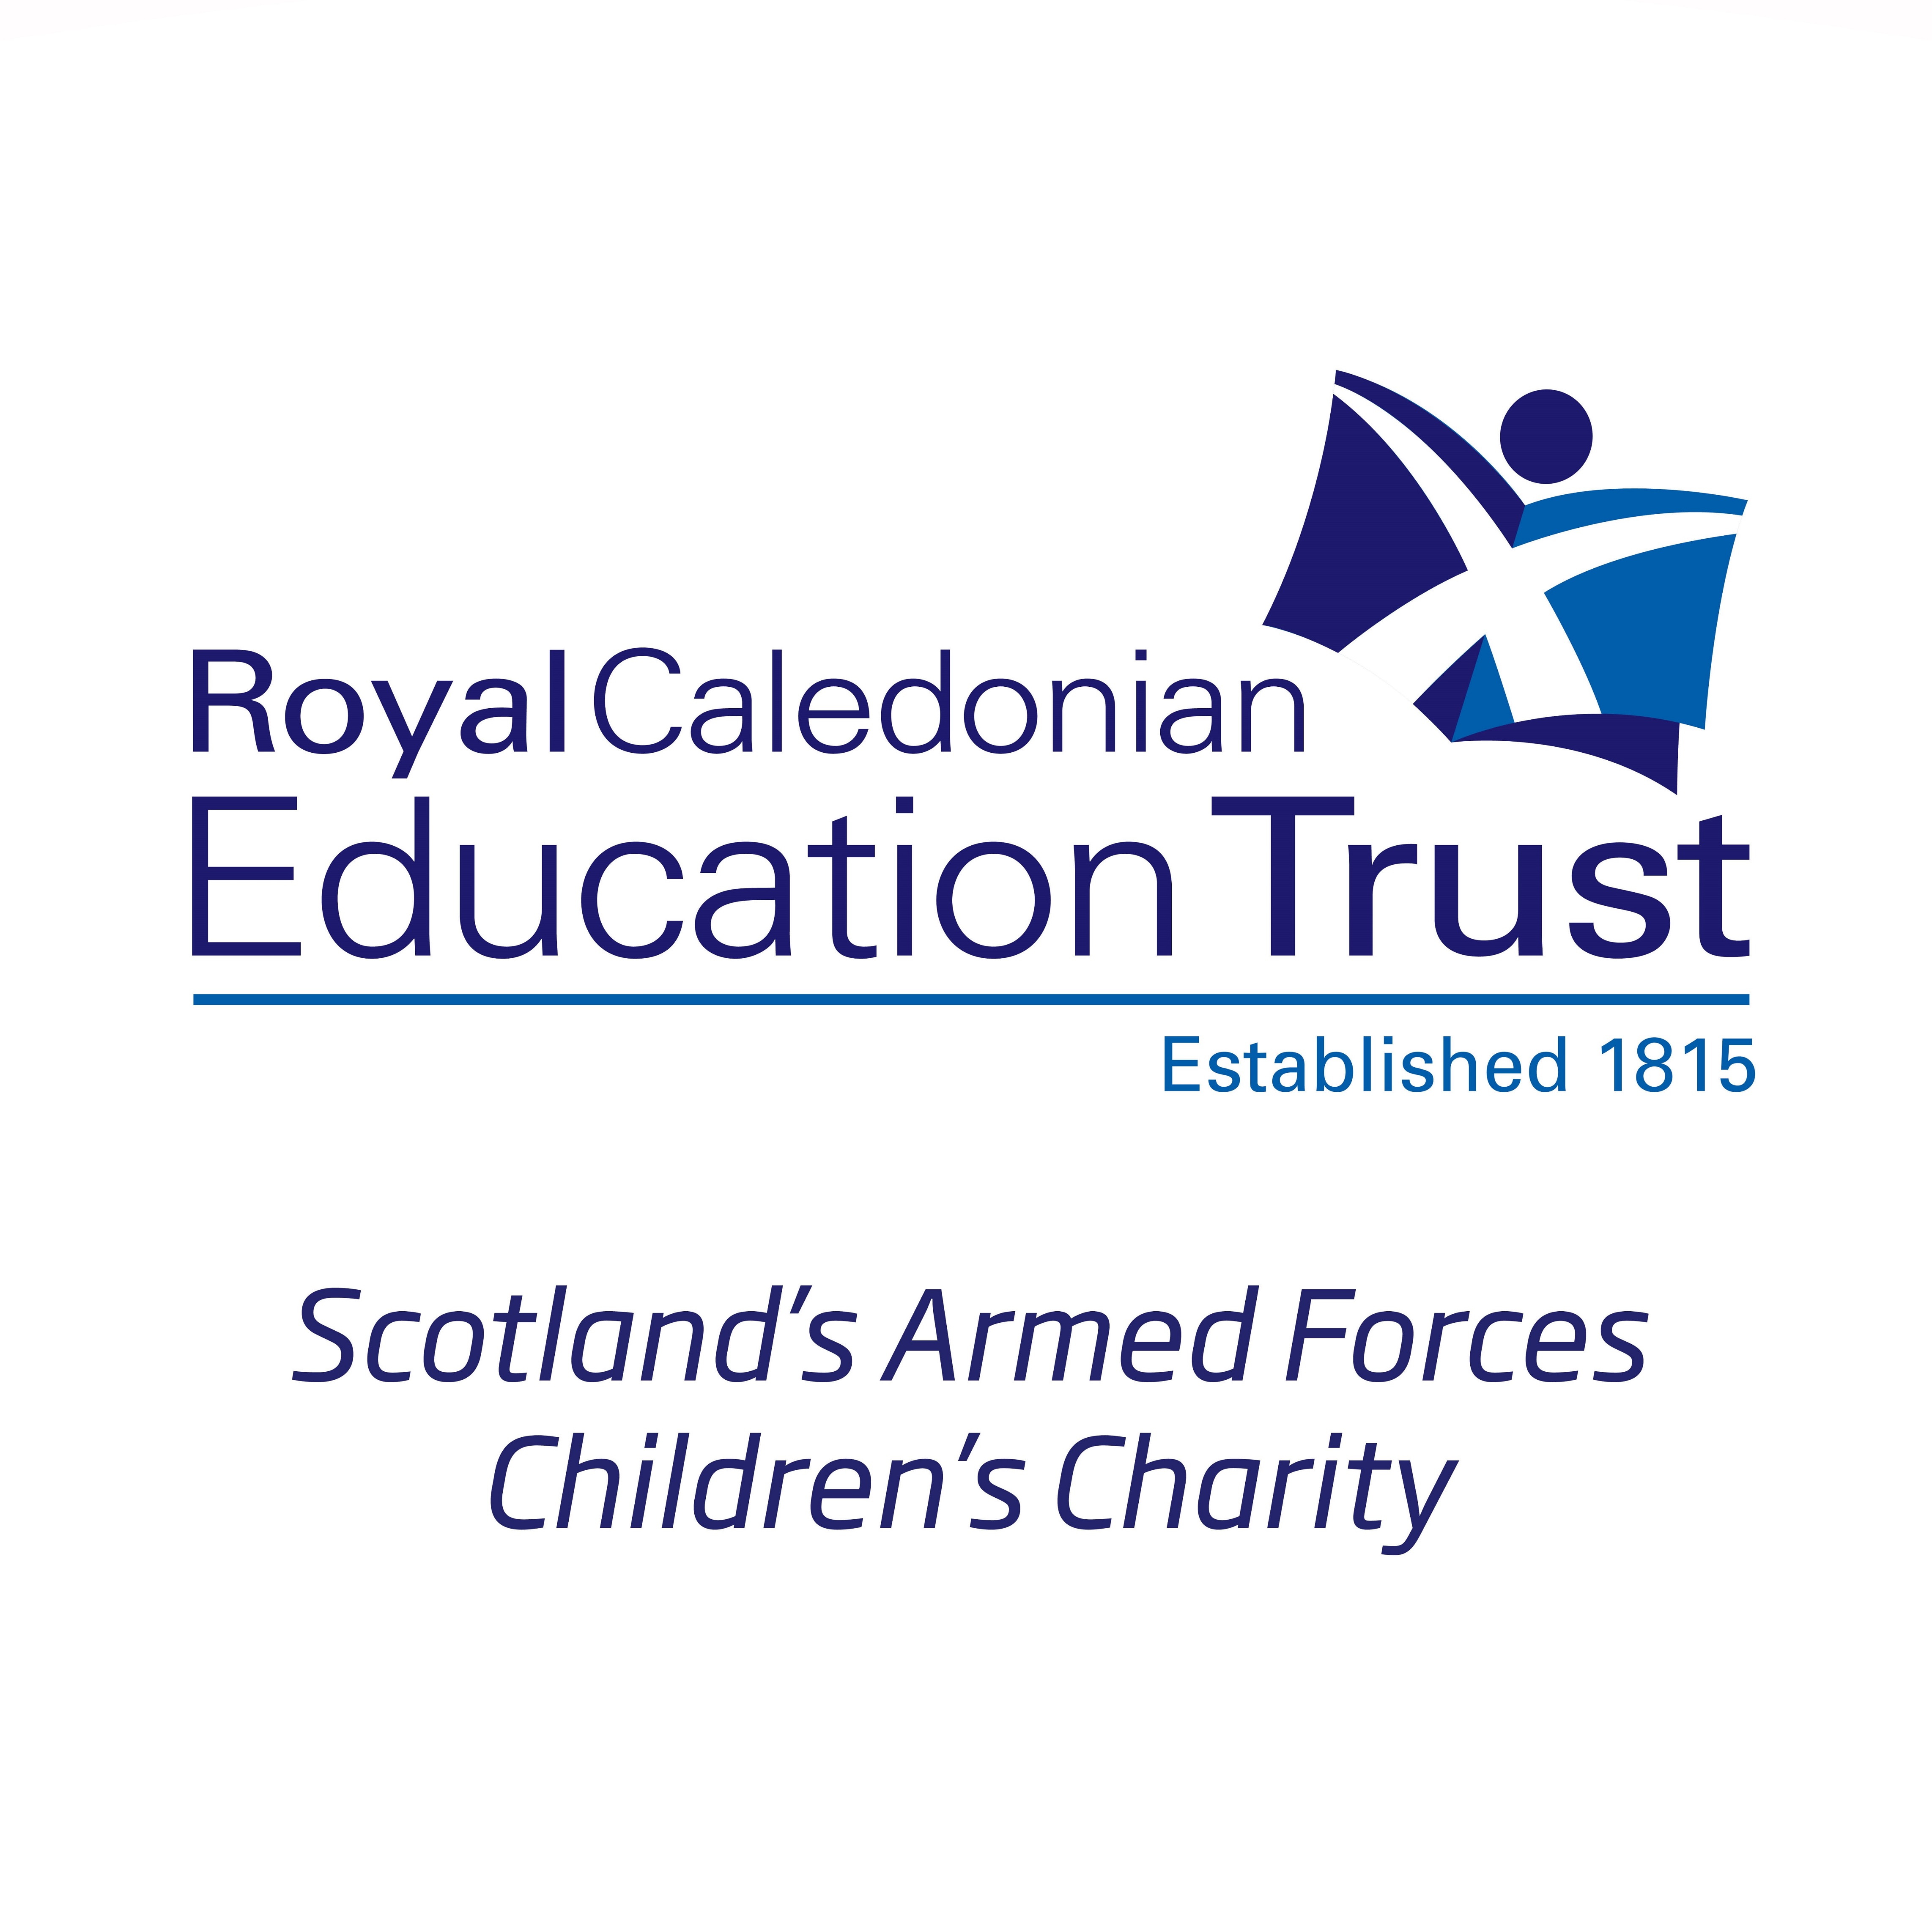 Royal Caledonian Education Trust